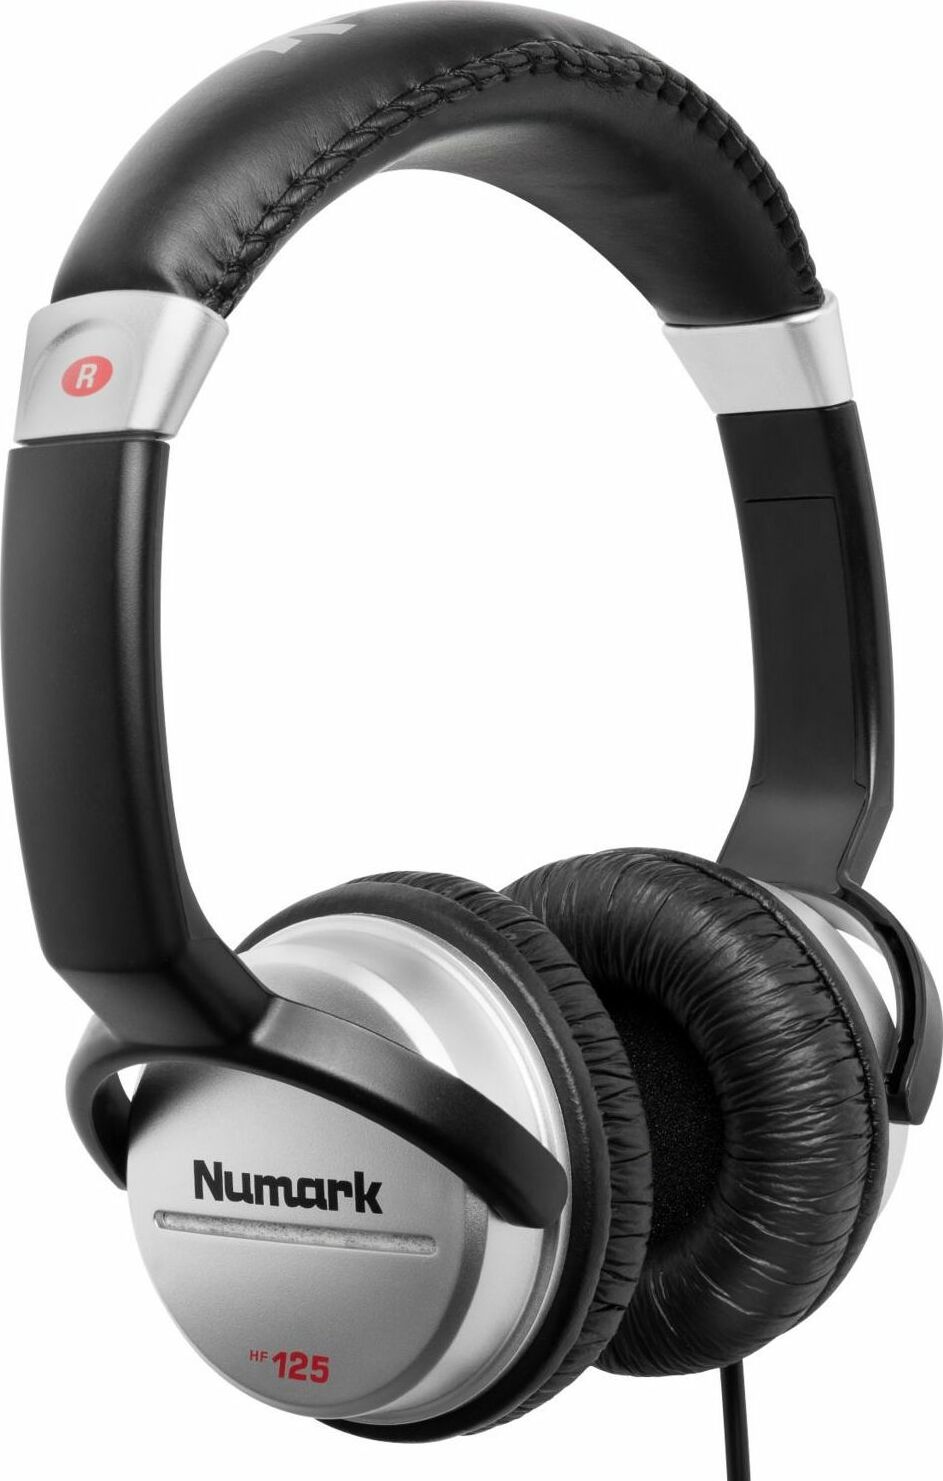 Numark Hf125 - Closed headset - Main picture